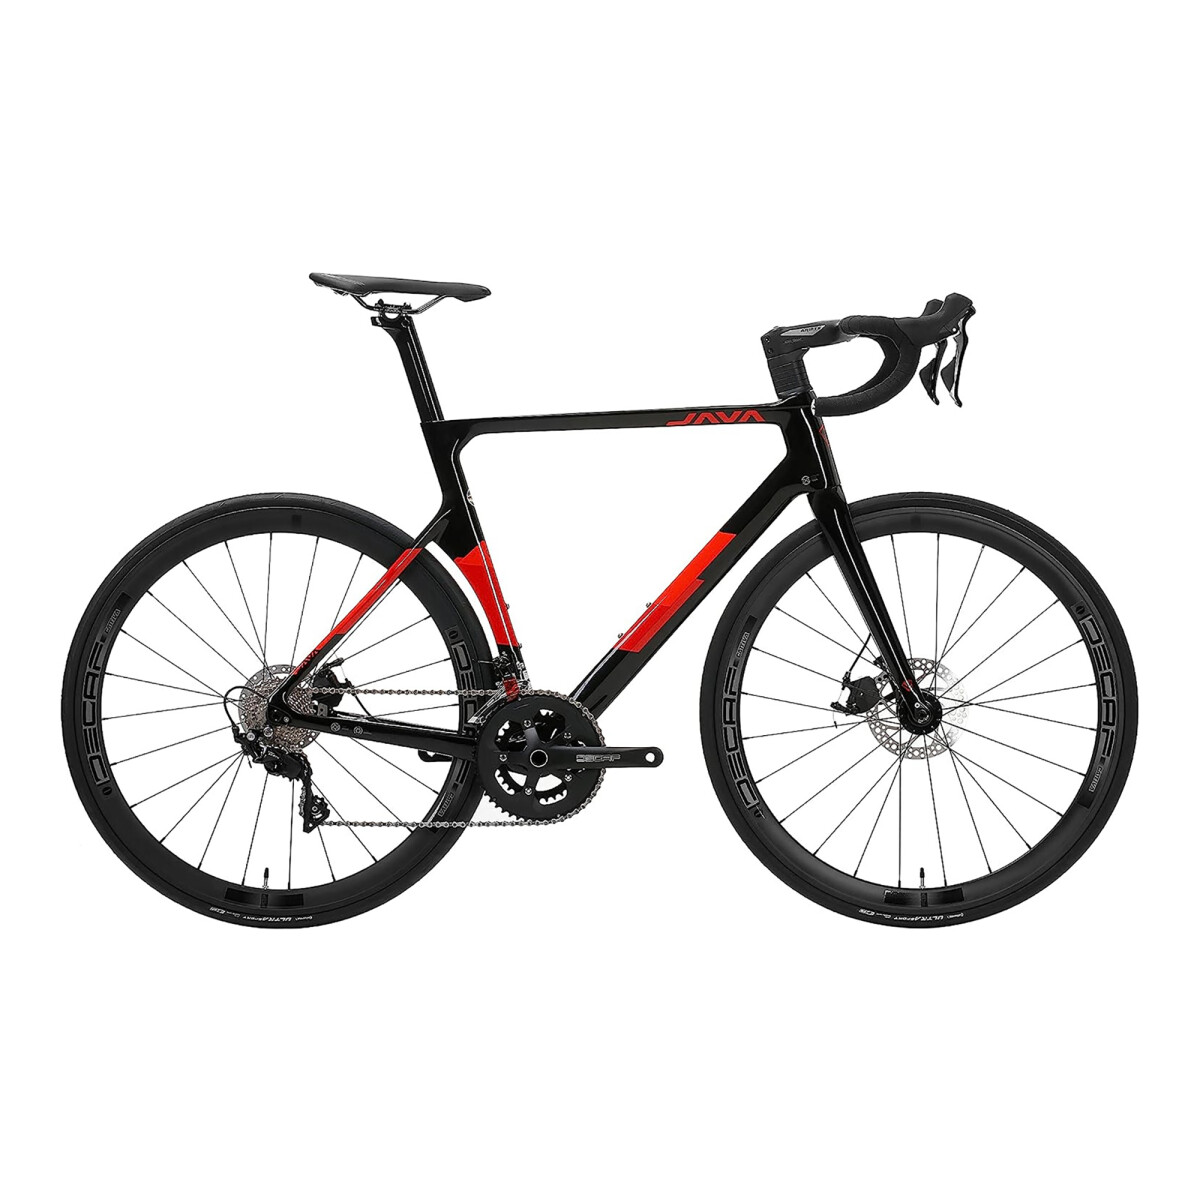 Java - Bicicleta de Ruta Vesuvio - 700C. 20 Velocidades, Talle 51. Color Negro / Rojo. - 001 